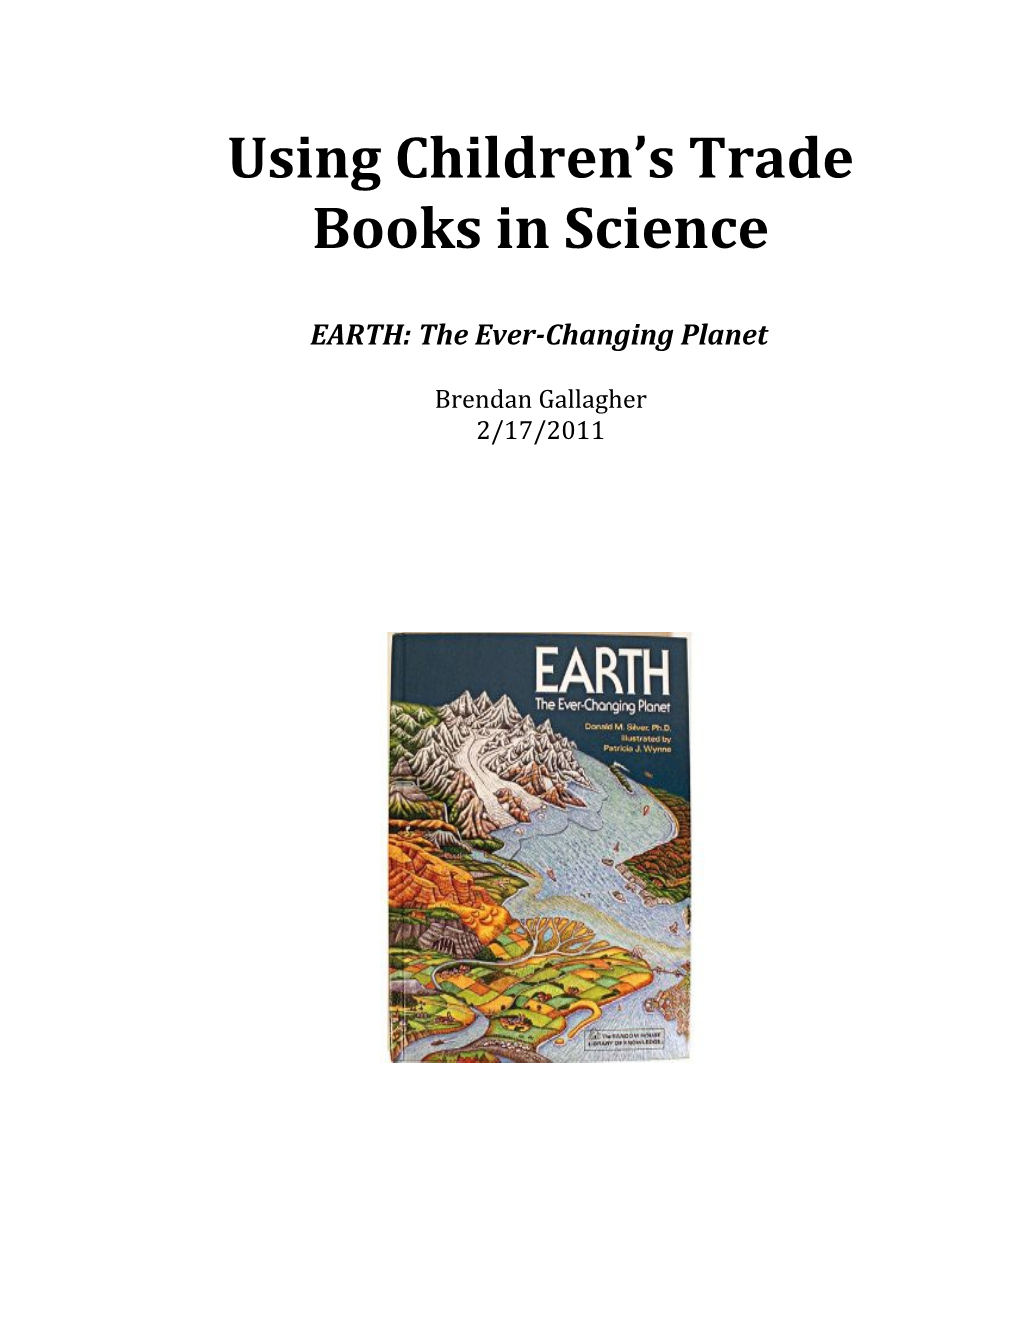 Using Children Strade Books in Science